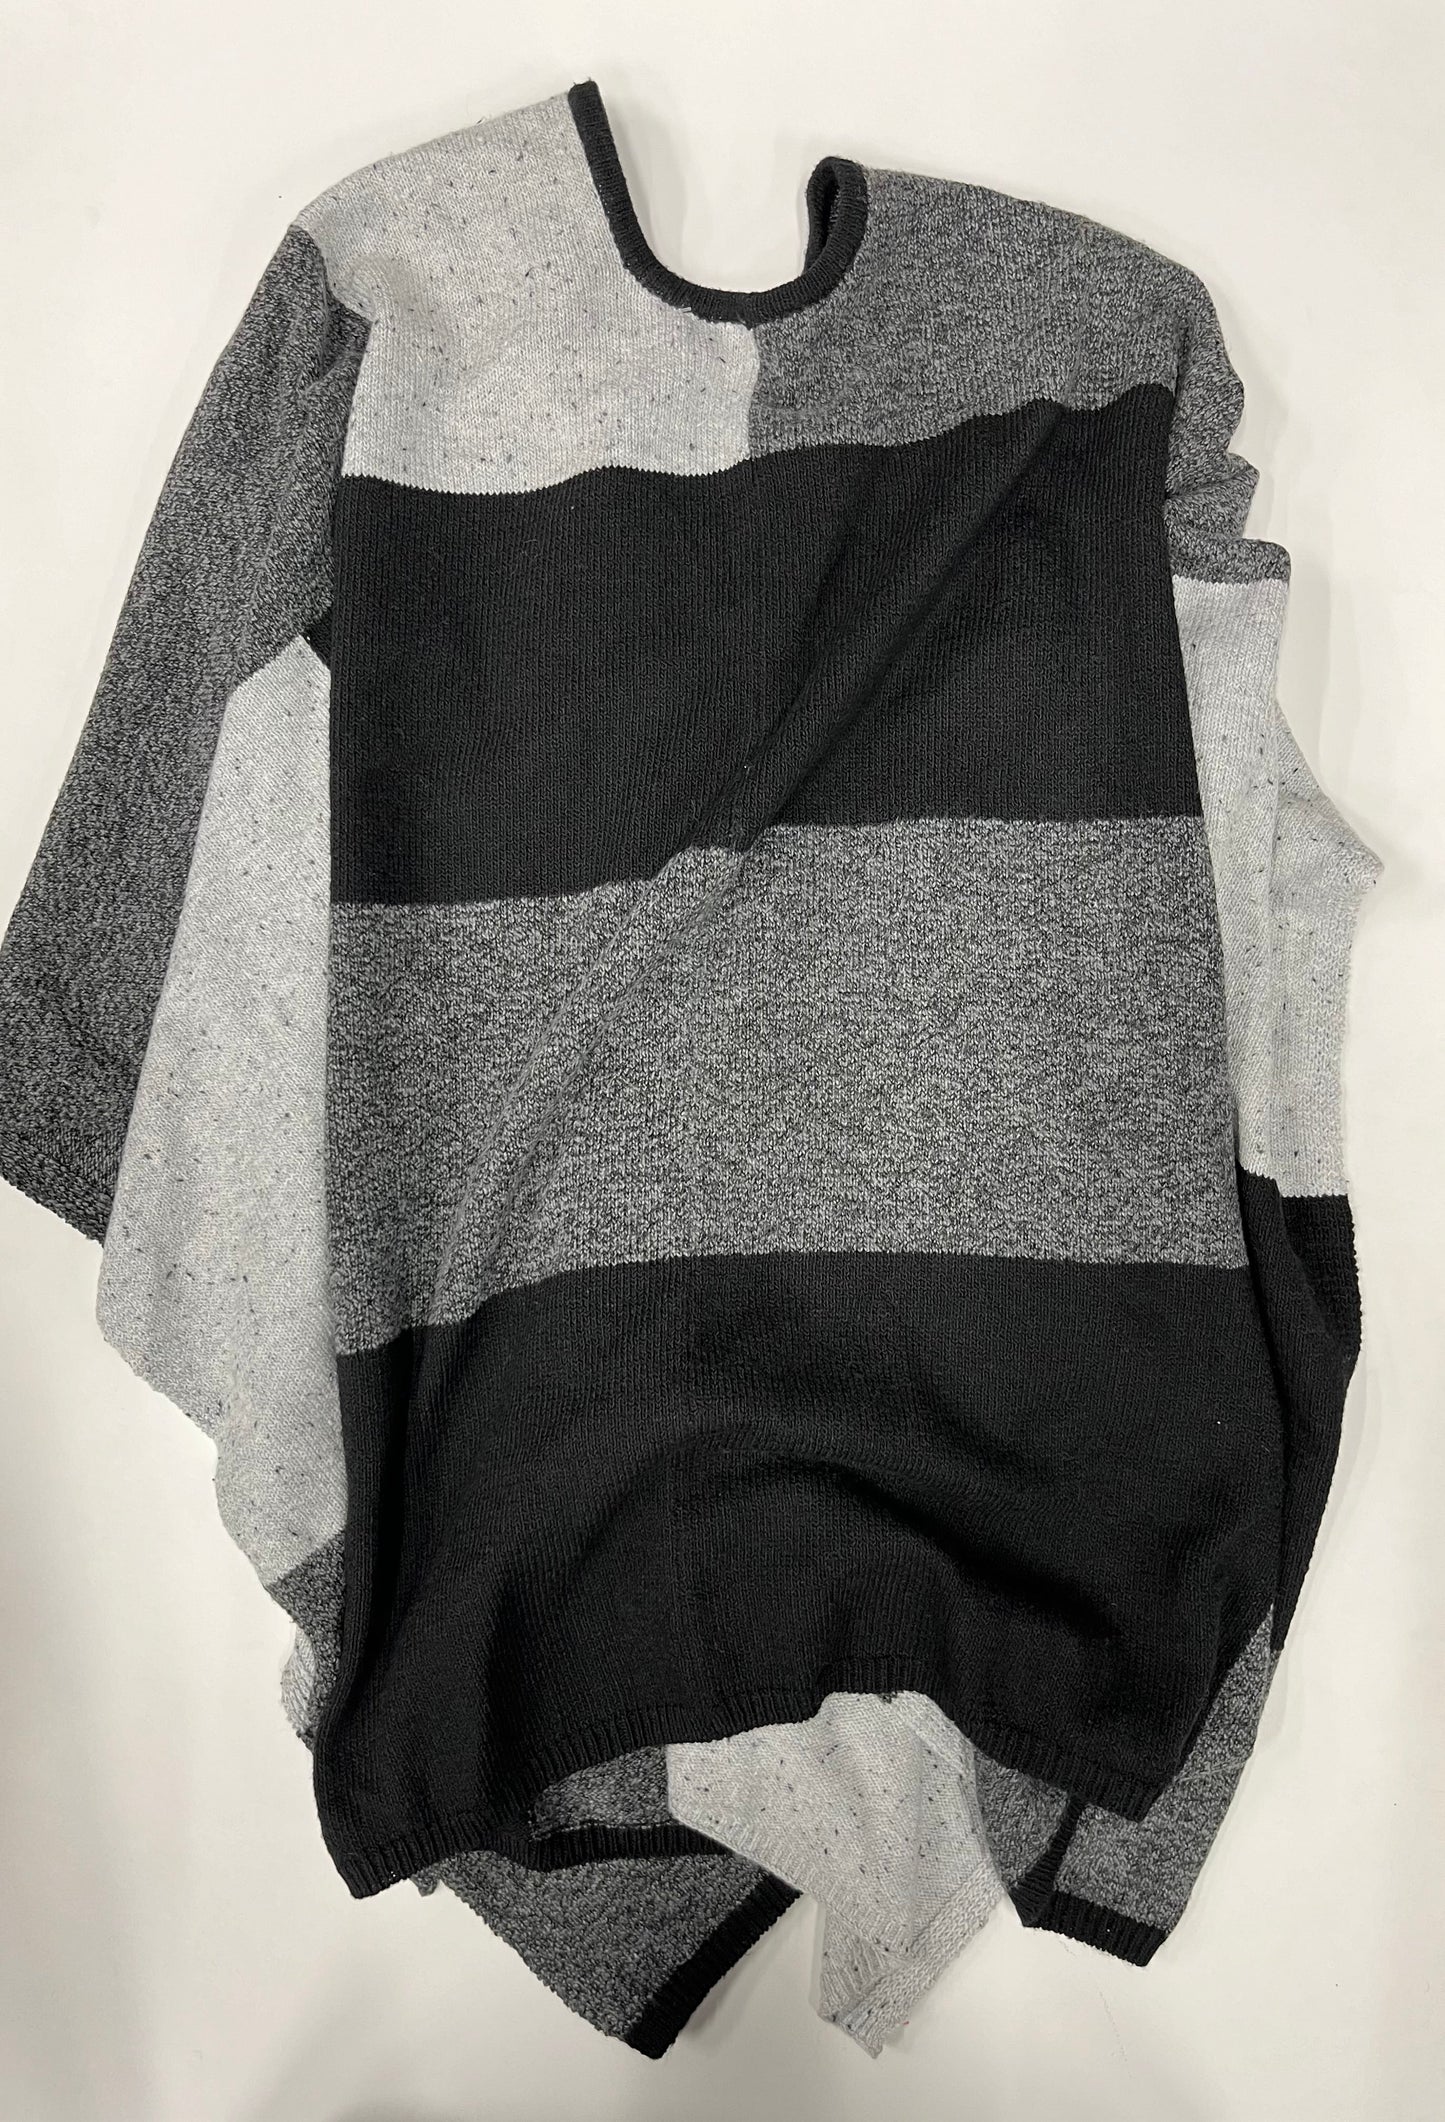 Sweater Cardigan Lightweight By Talbots  Size: Osfm